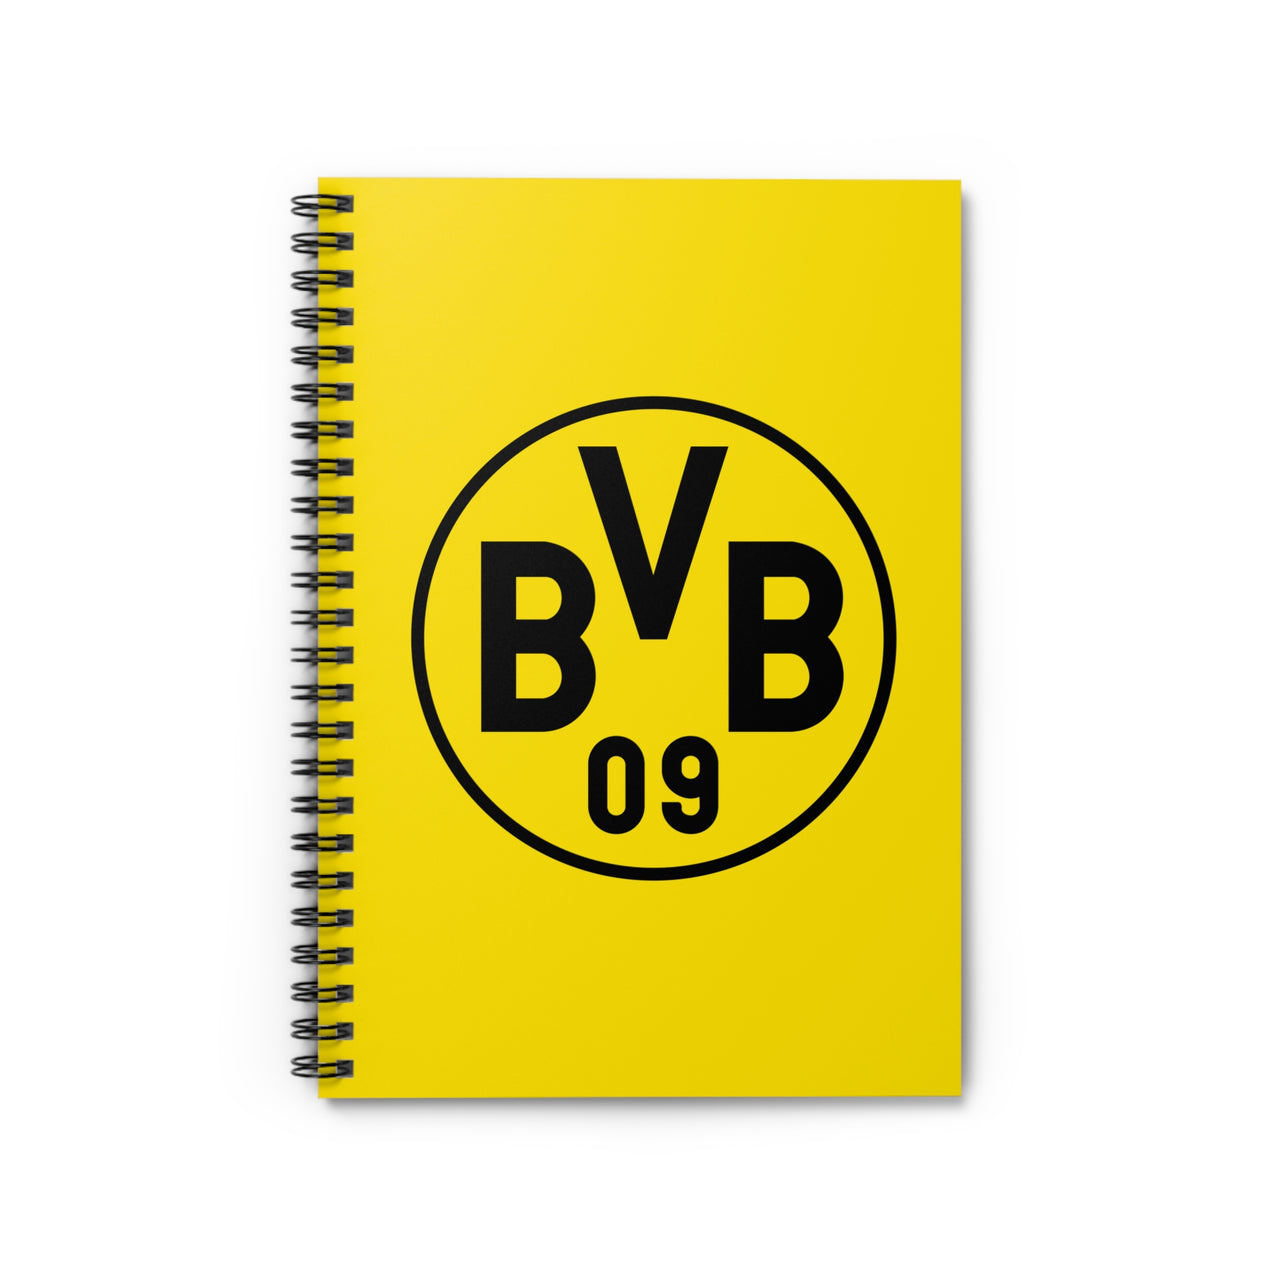 Borussia Dortmund Spiral Notebook - Ruled Line